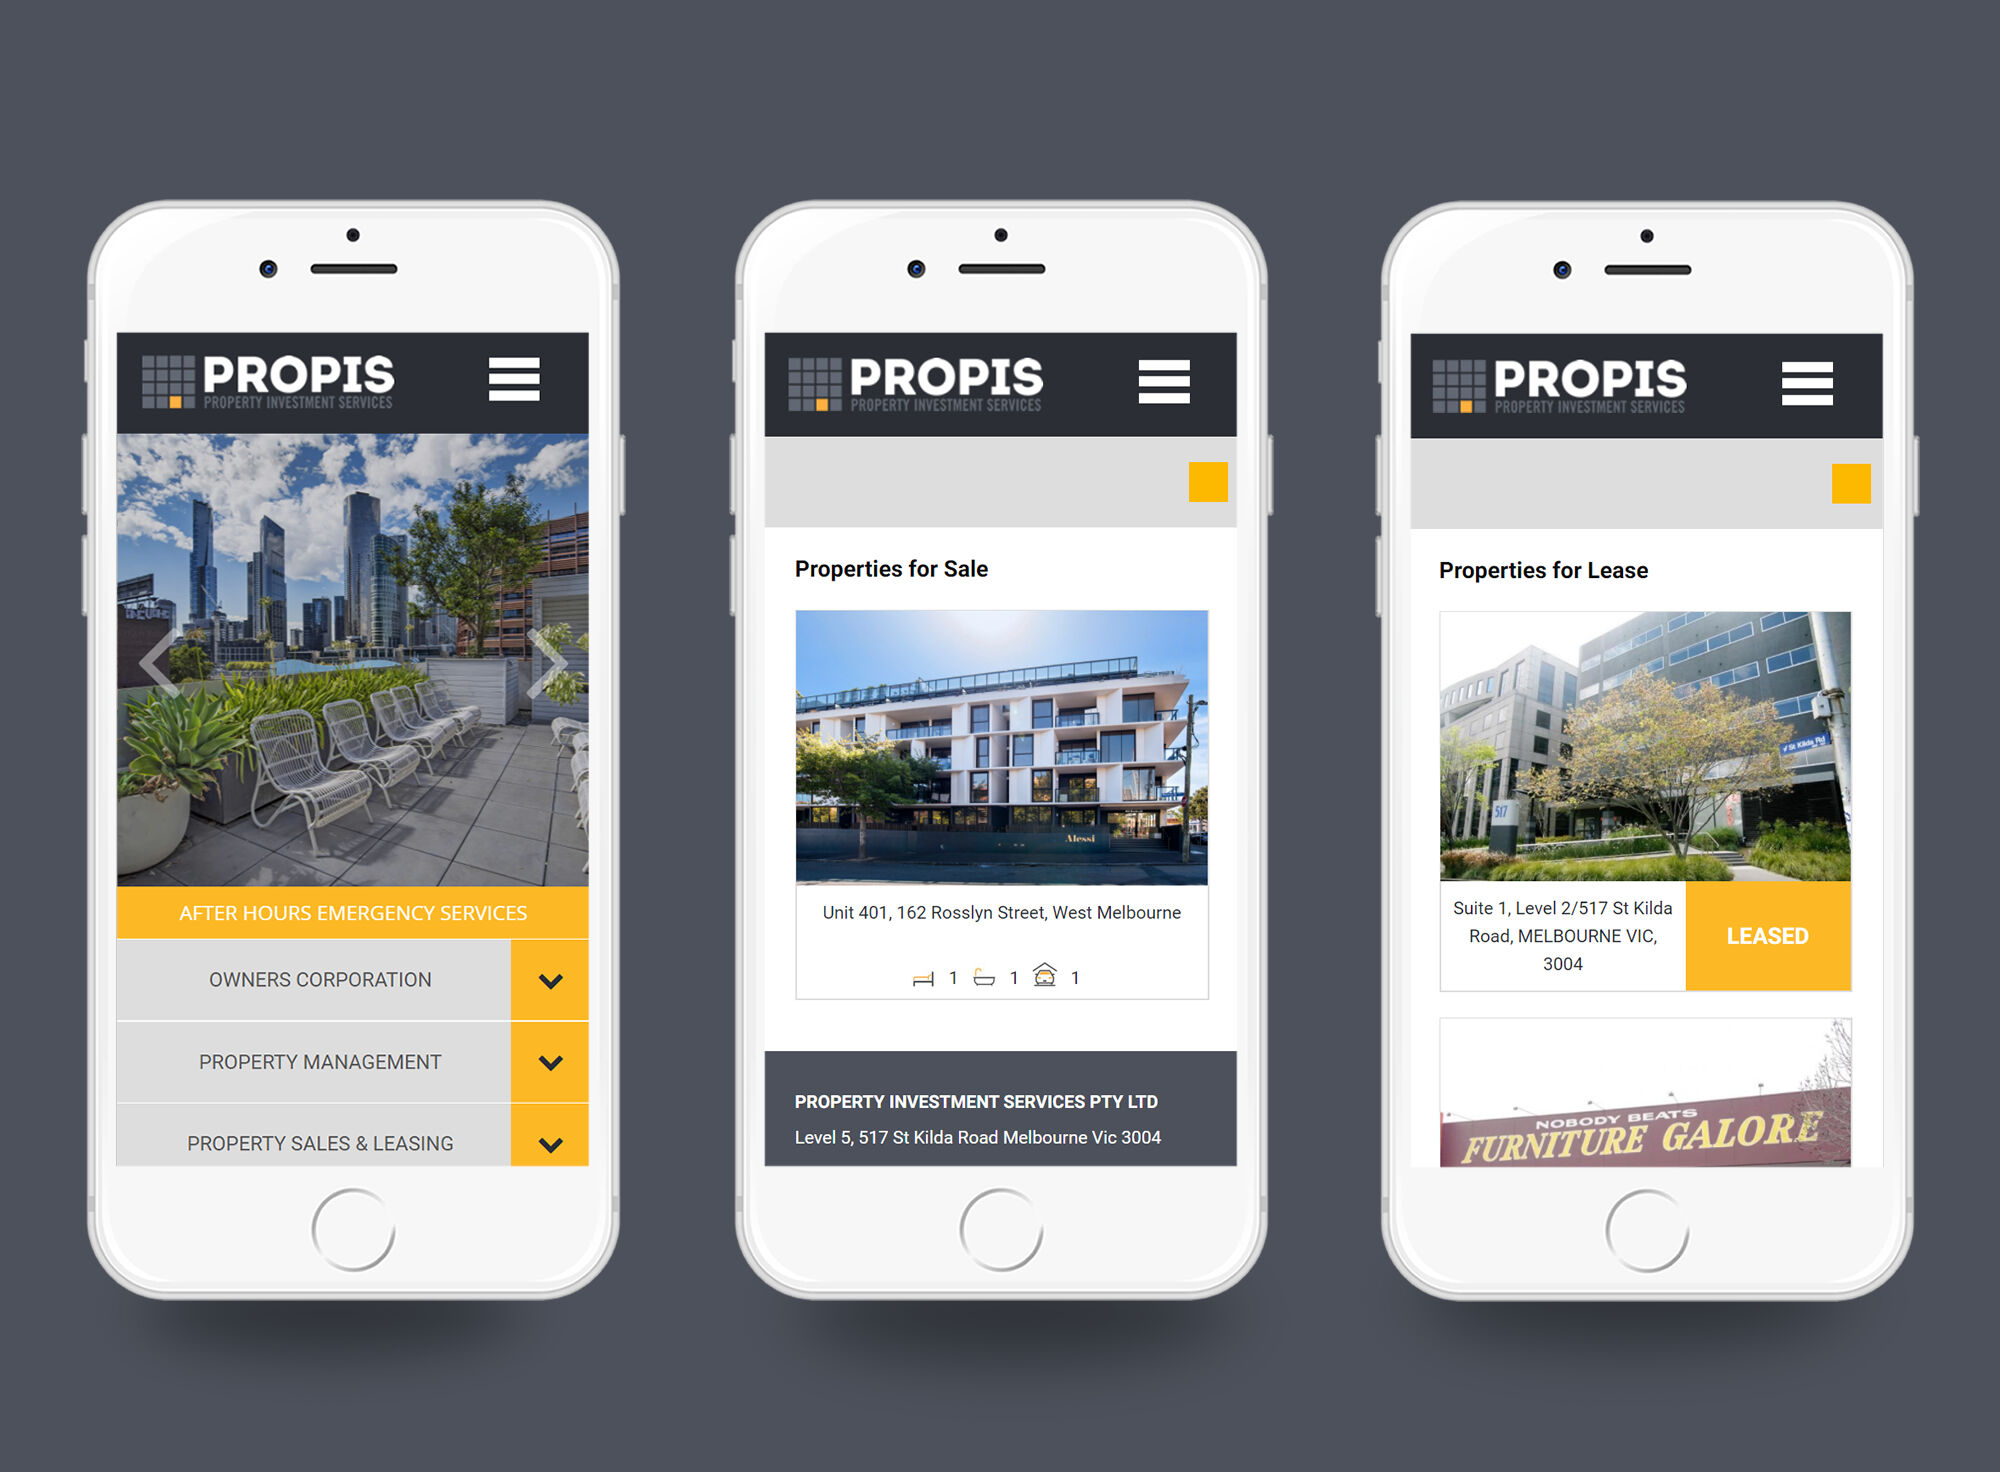 PROPIS Mobile Friendly Design